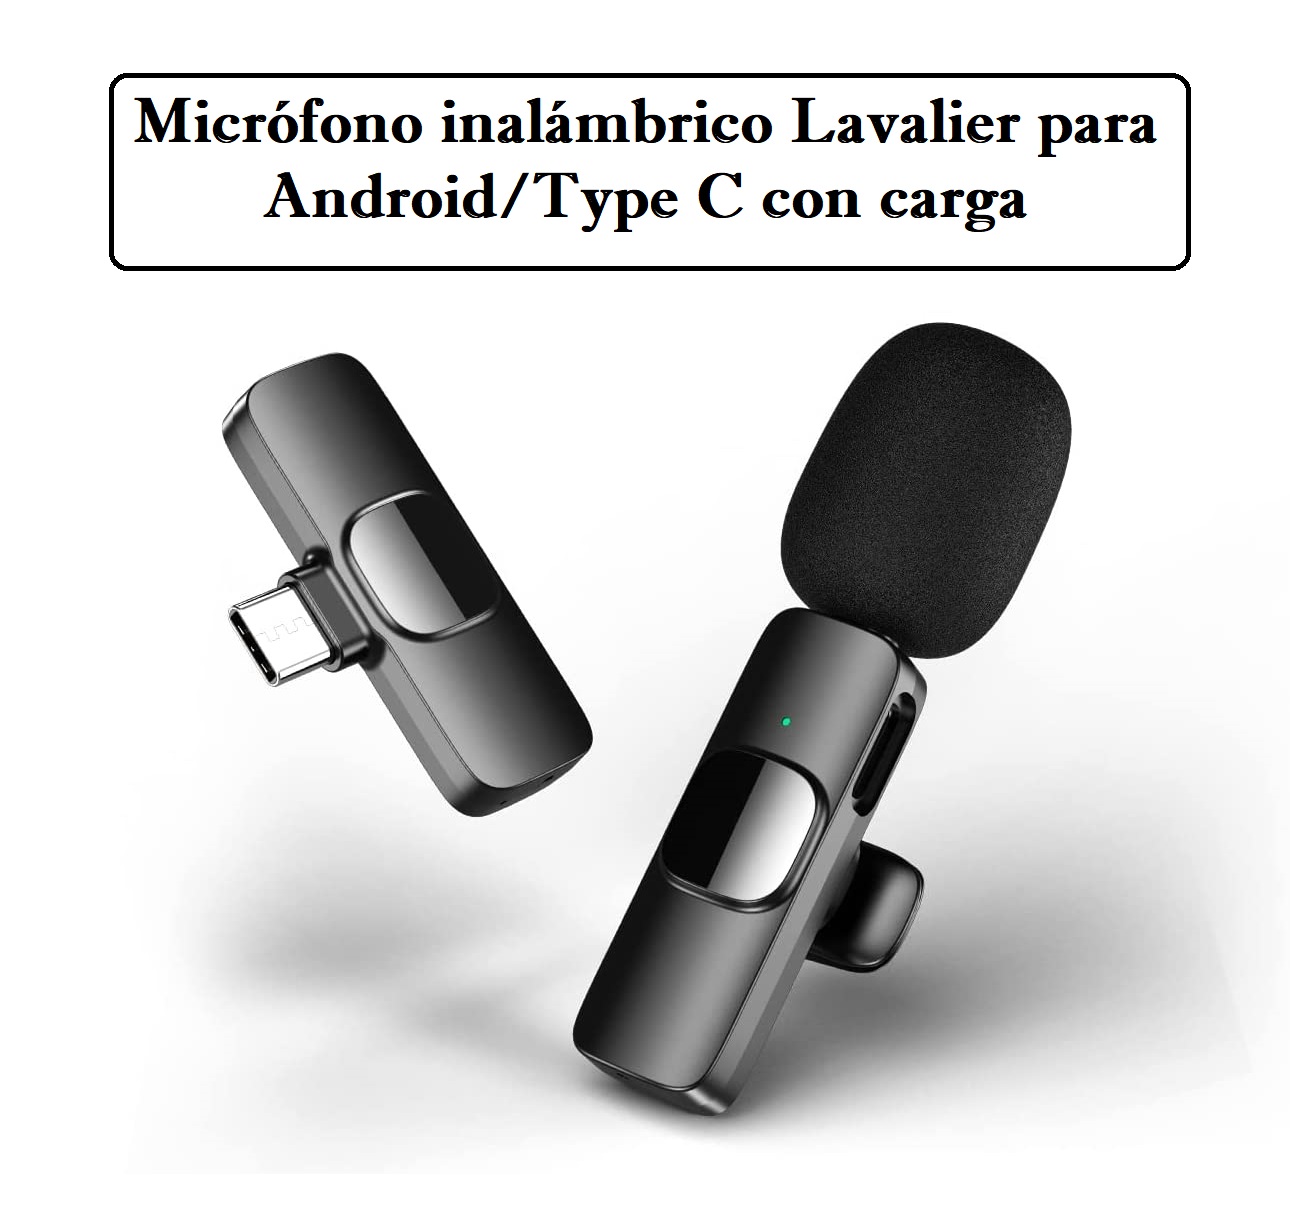 Micrófono inalámbrico Lavalier para Android/Type C con carga,AAM064